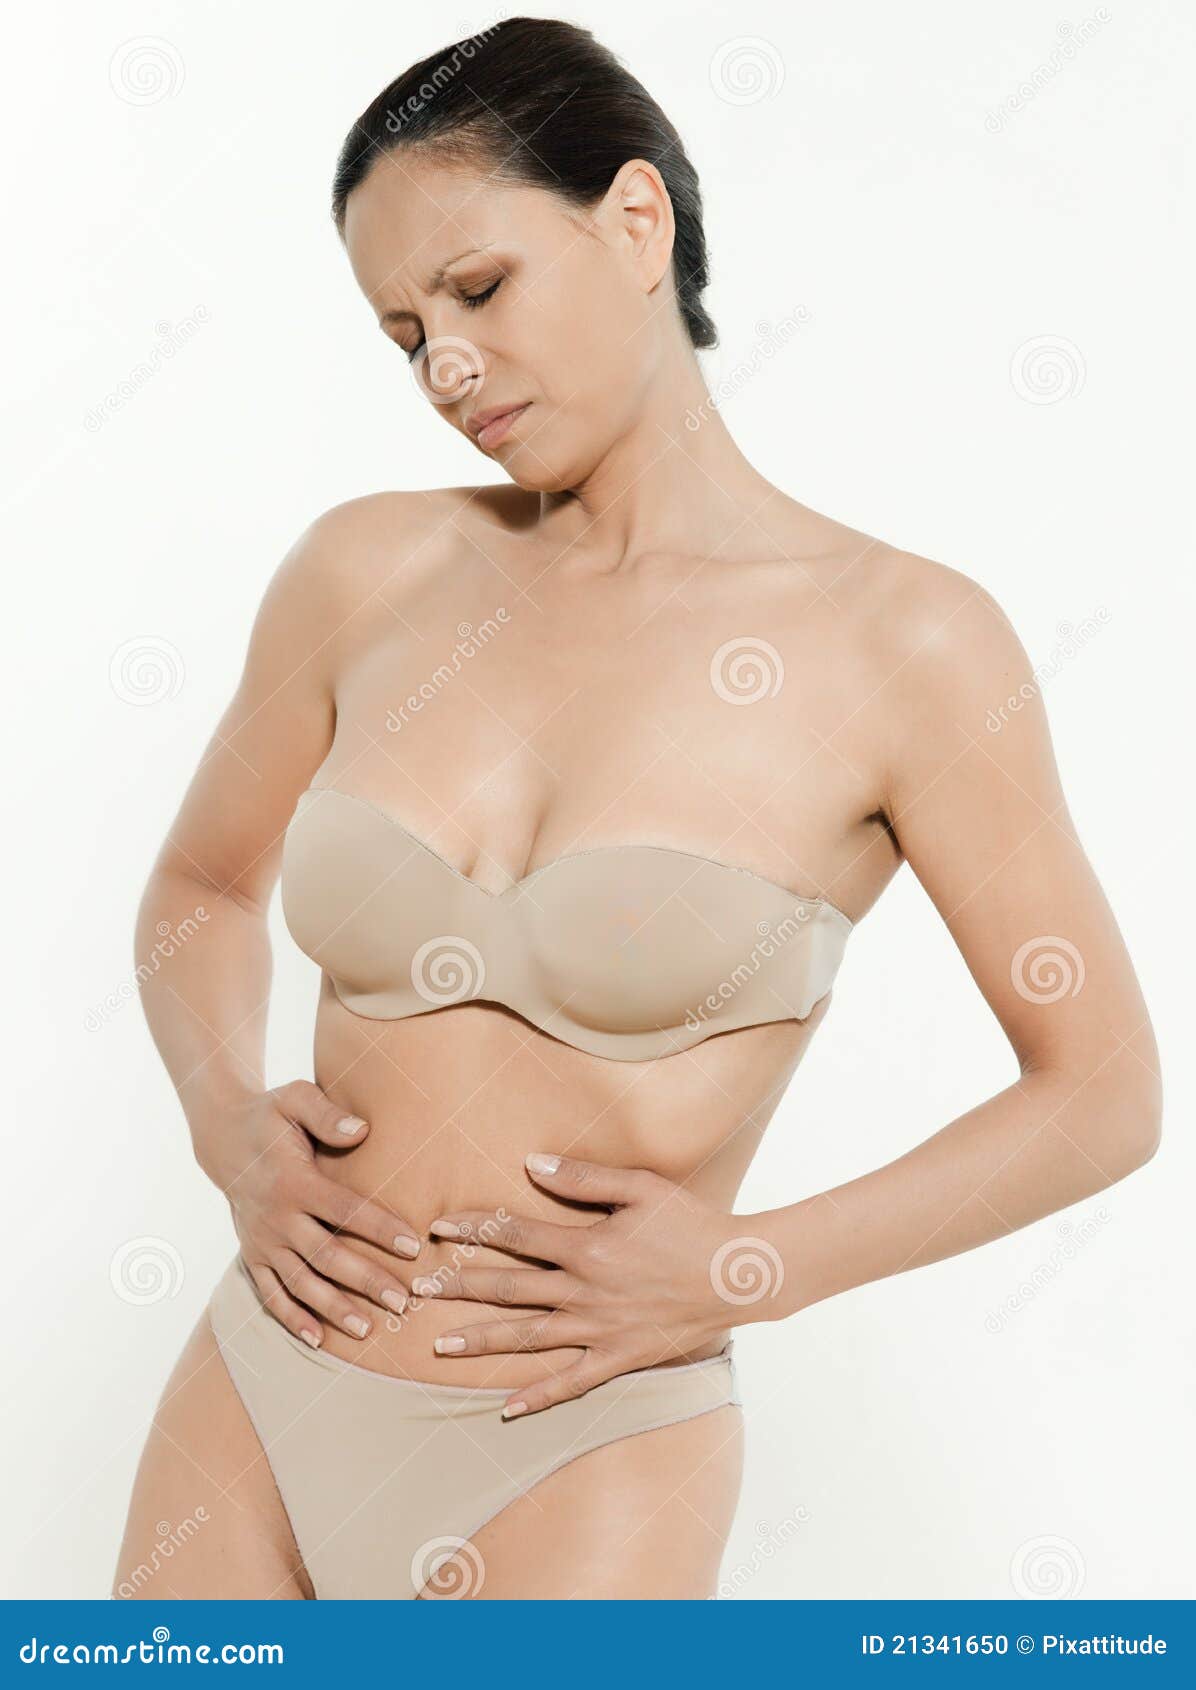 https://thumbs.dreamstime.com/z/asian-woman-undergarments-having-period-pain-21341650.jpg